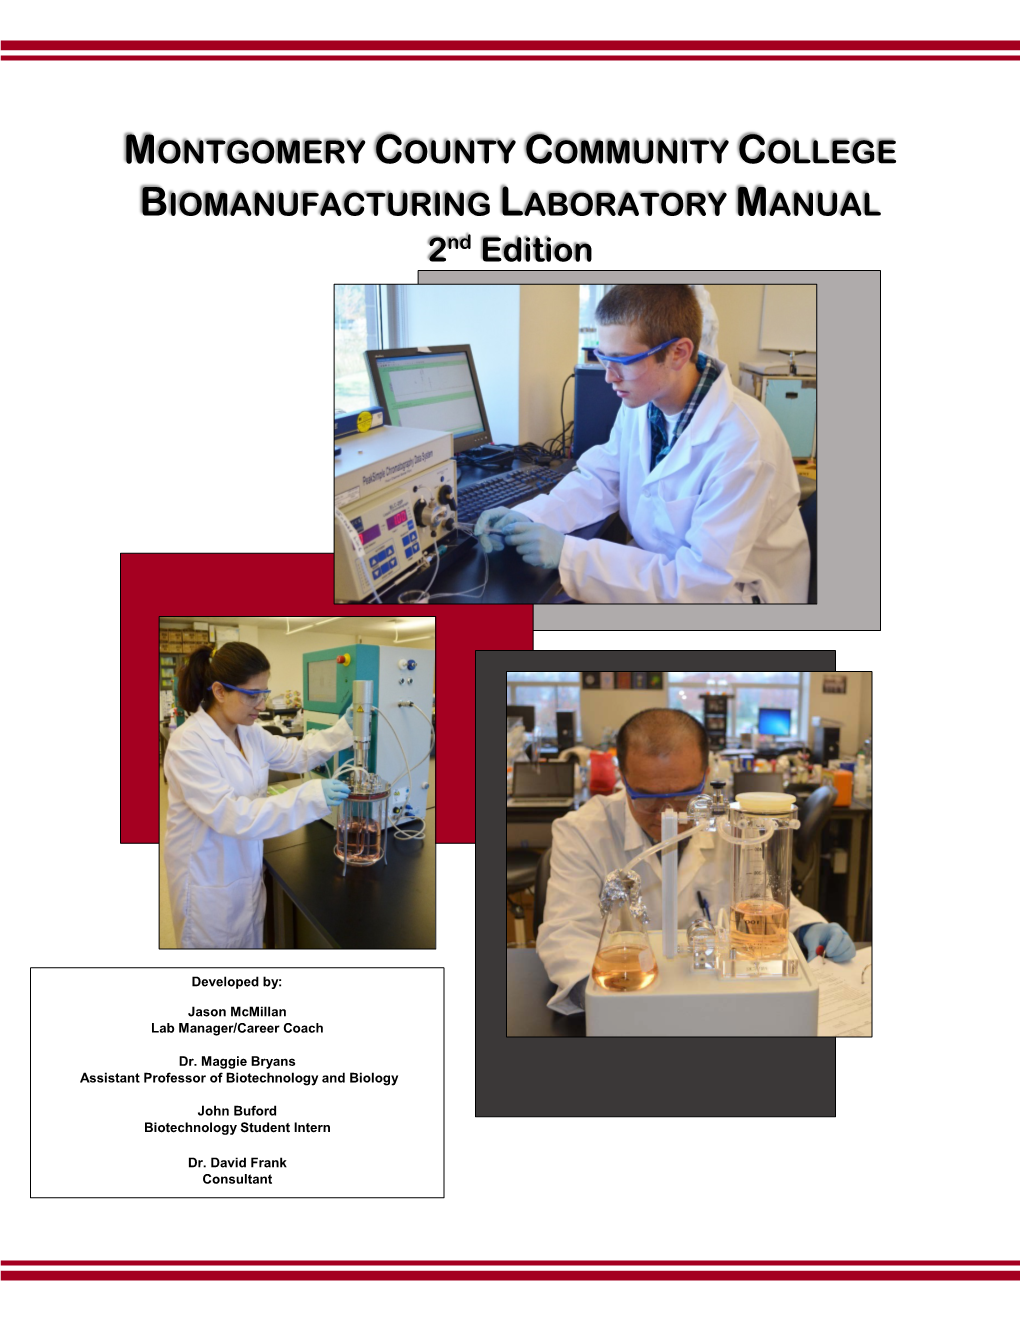 Montgomery County Community College Biomanufacturing Laboratory Manual 2Nd Edition.Pdf